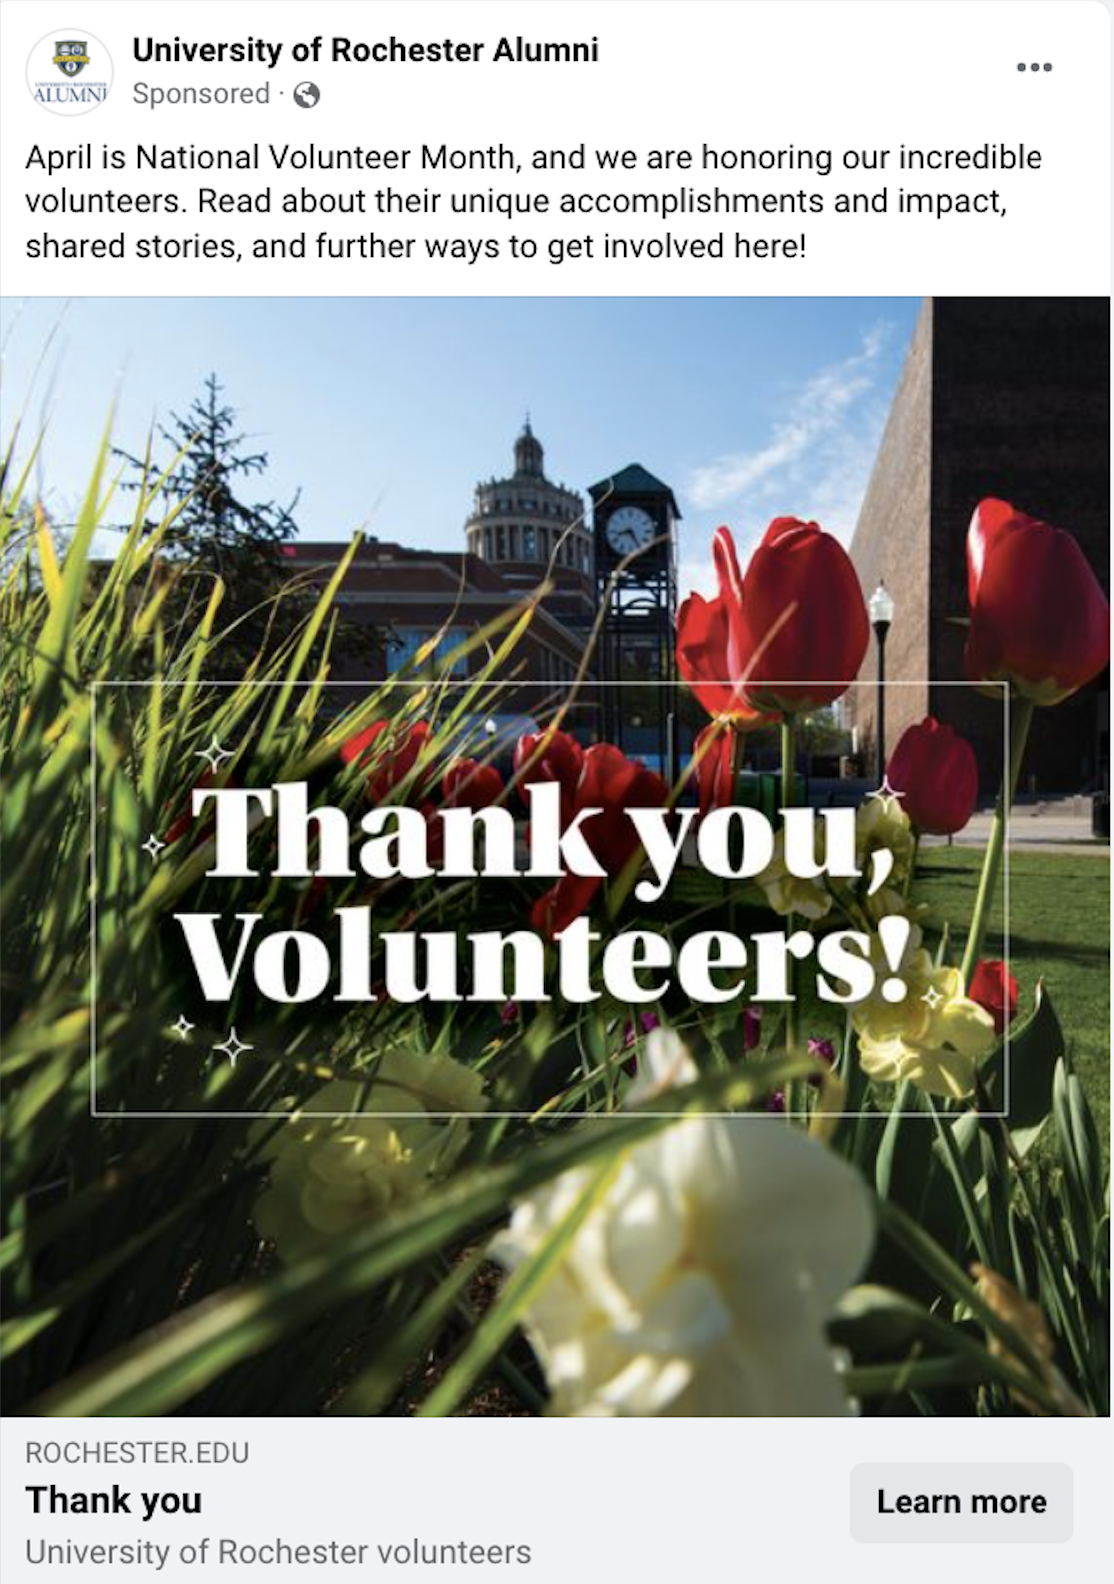 Screenshot of Facebook post thanking volunteers for National Volunteer Month